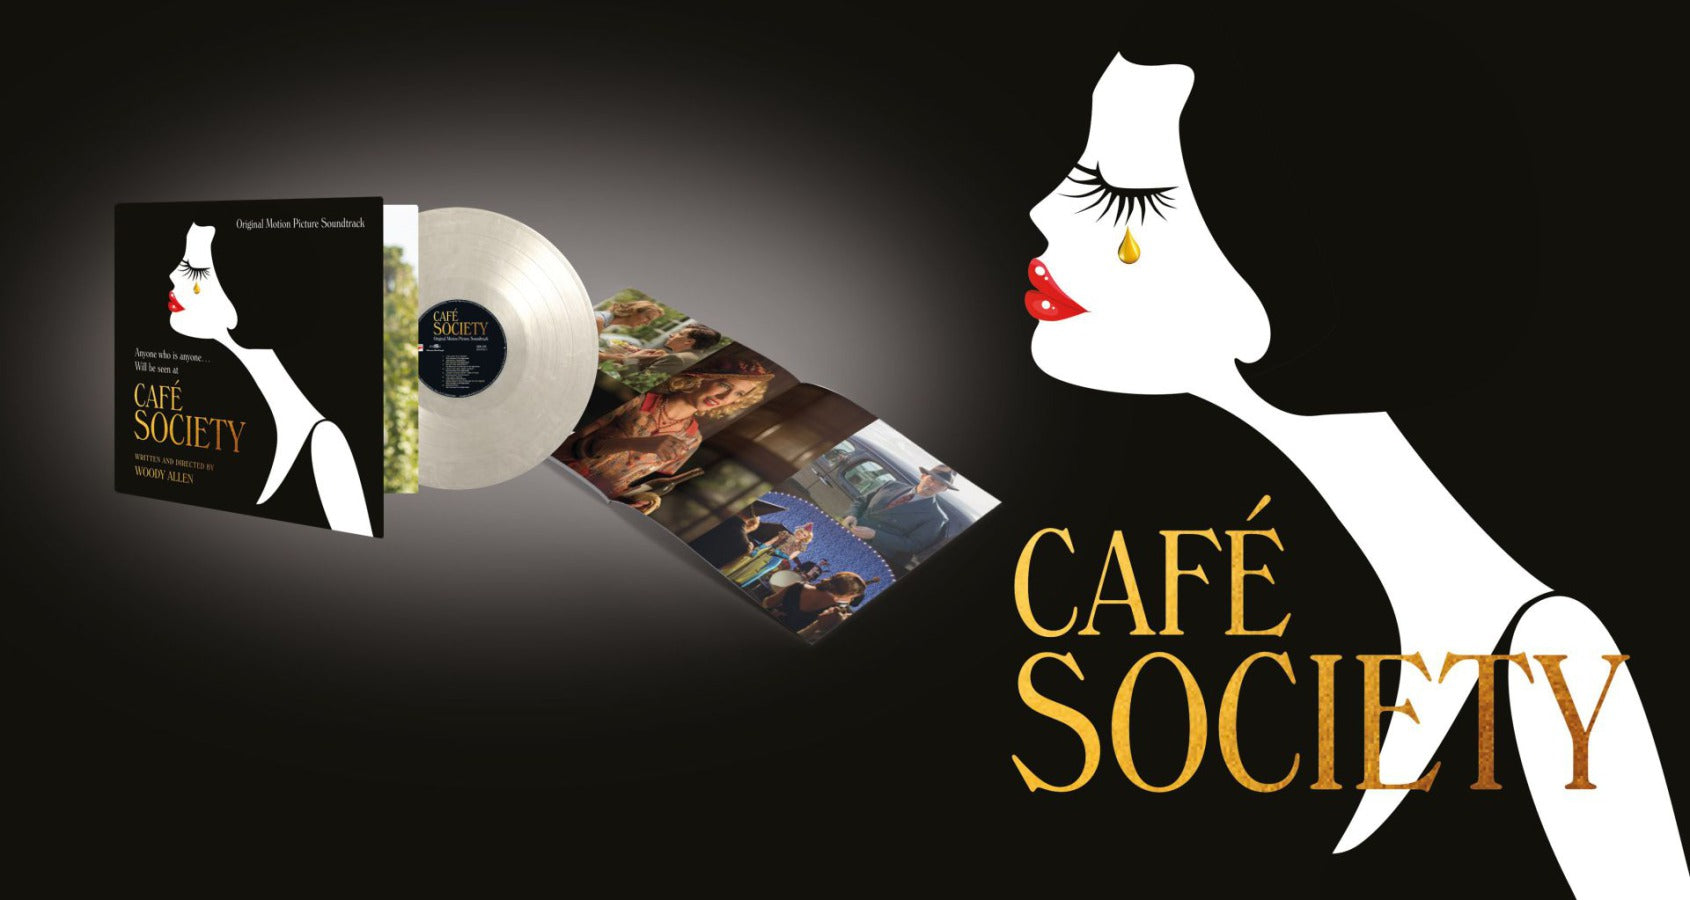 VARIOUS - Café Society - Original Motion Picture Soundtrack (2023 Reissue) - LP - Gatefold 180g Clear & White Marbled Vinyl [JUN 9]